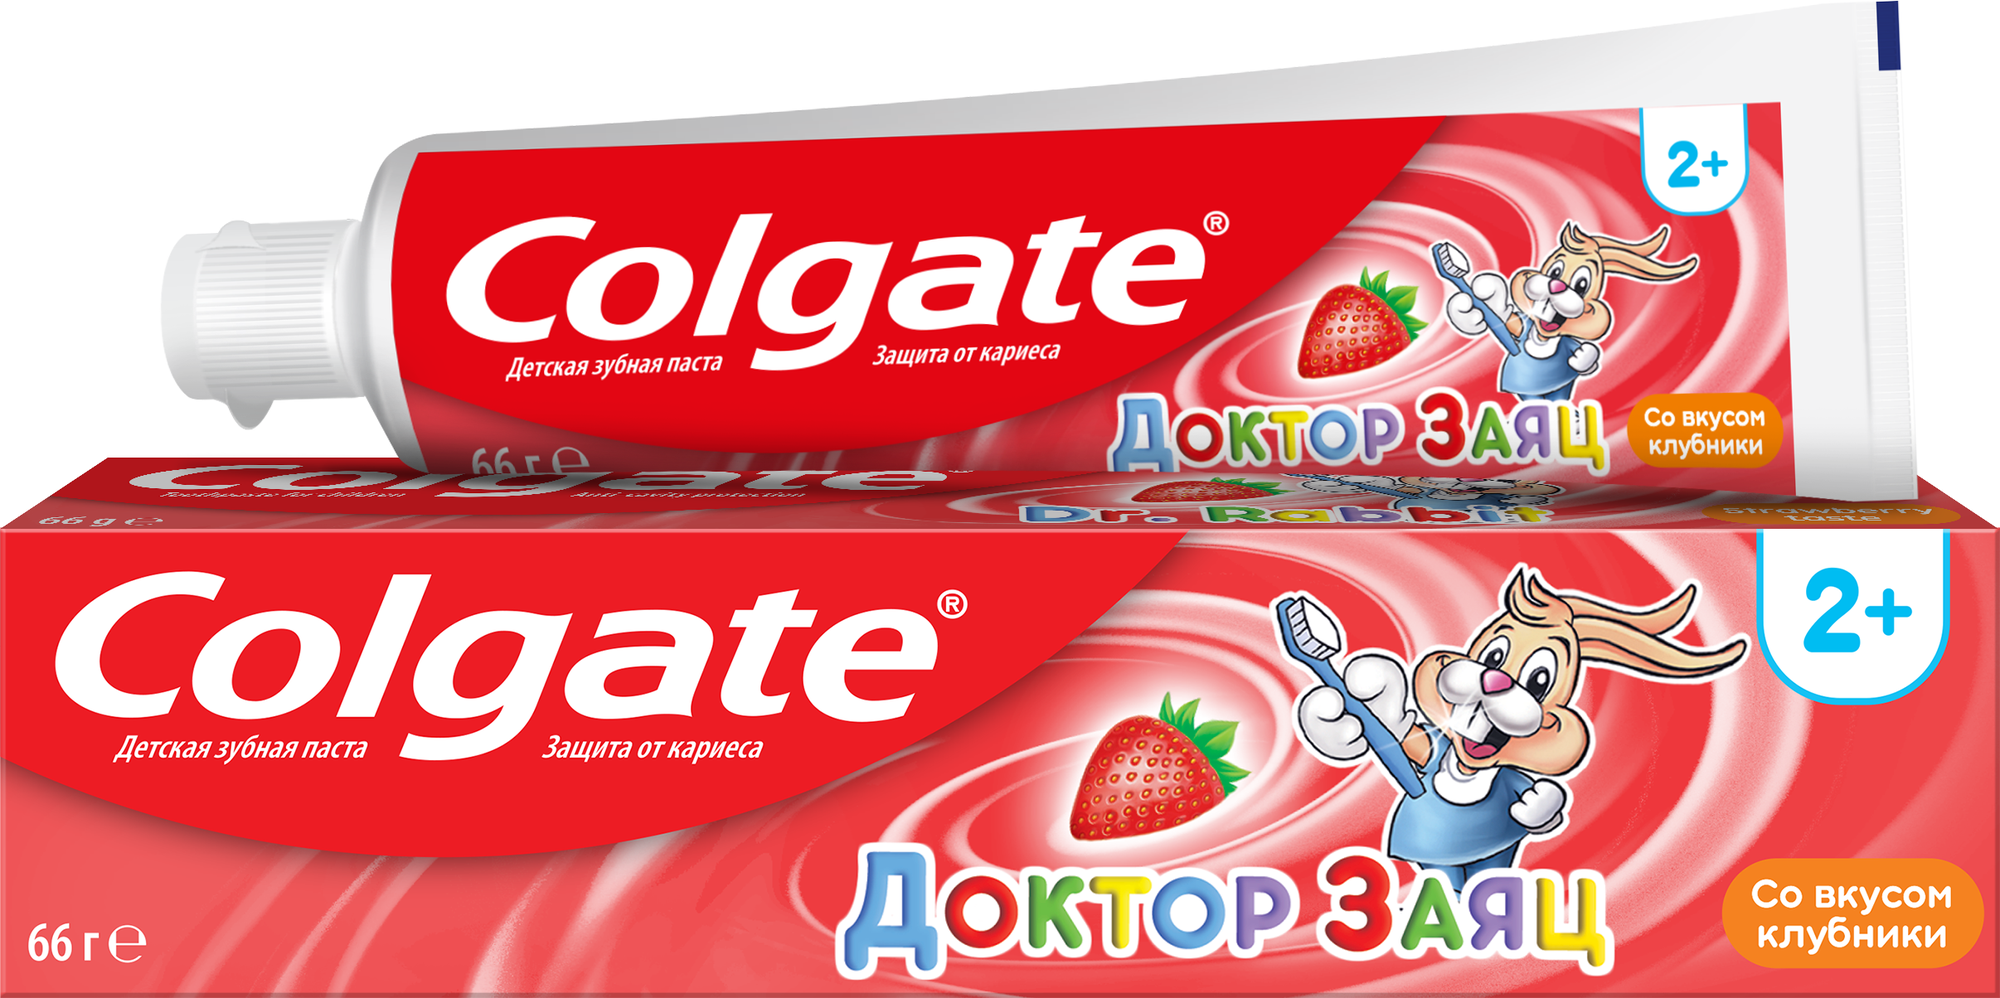 Зубная паста Colgate Доктор Заяц со вкусом клубники 2+, 50 мл